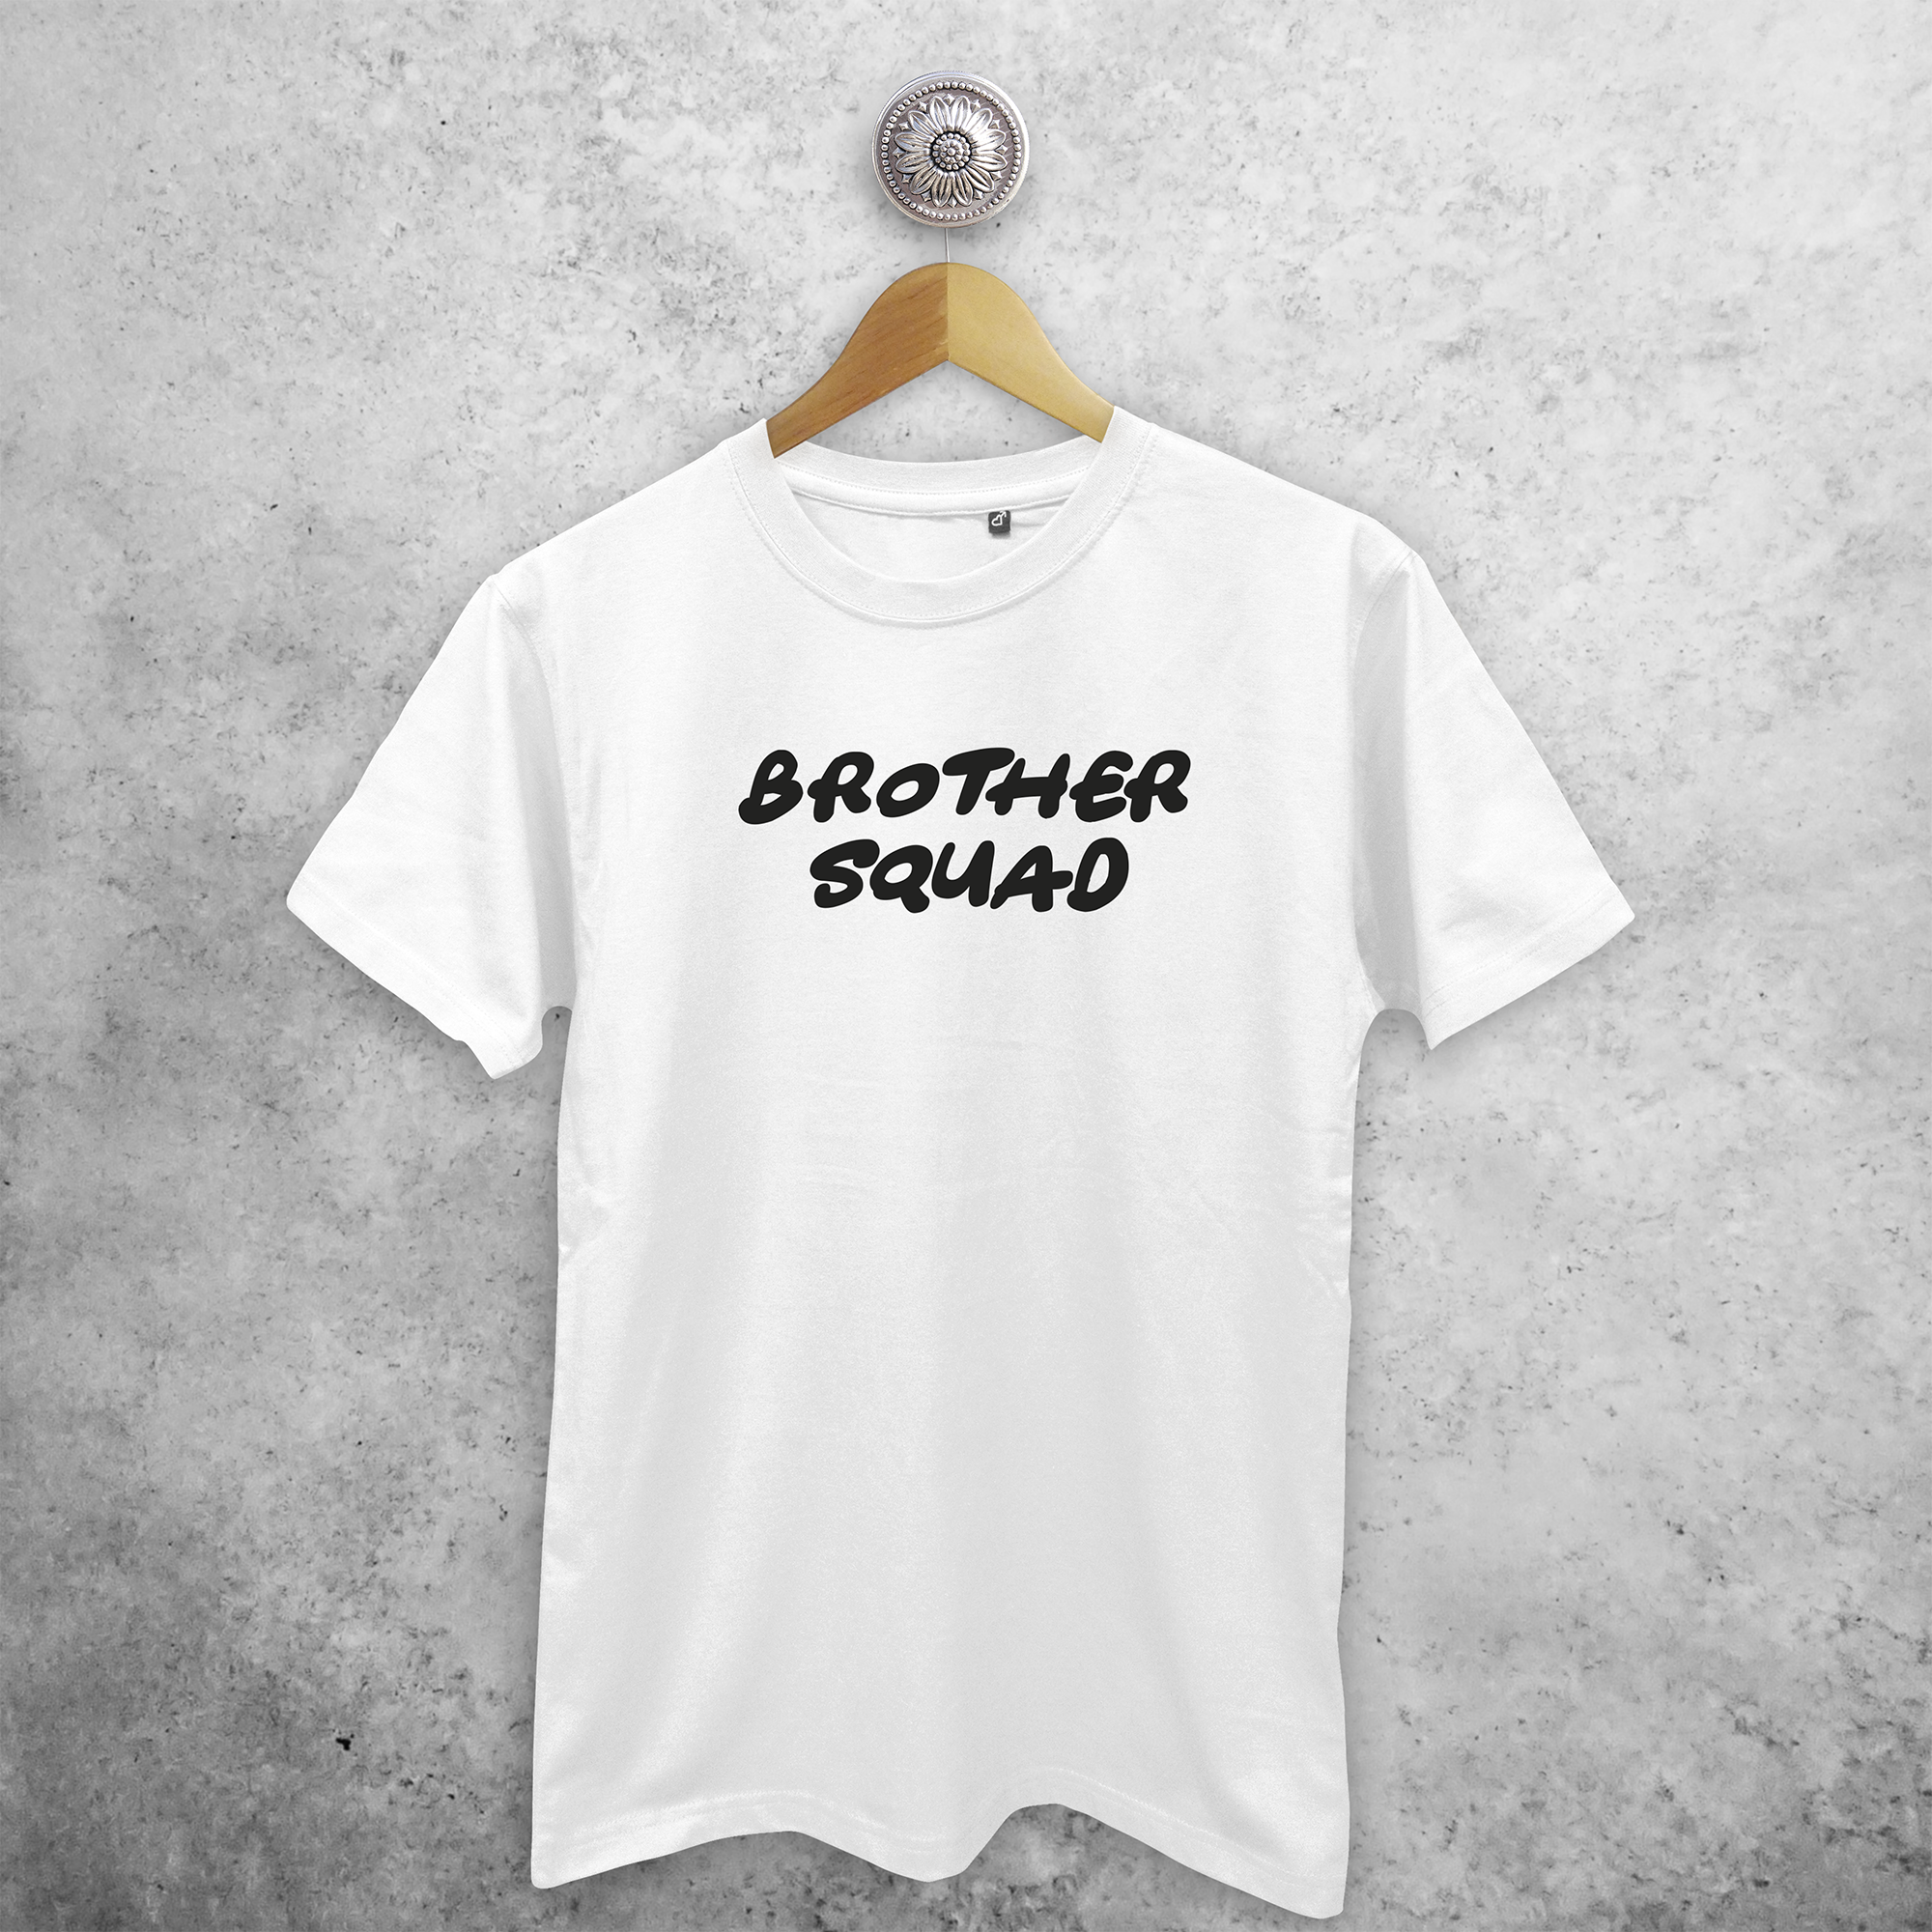 'Brother squad' volwassene shirt